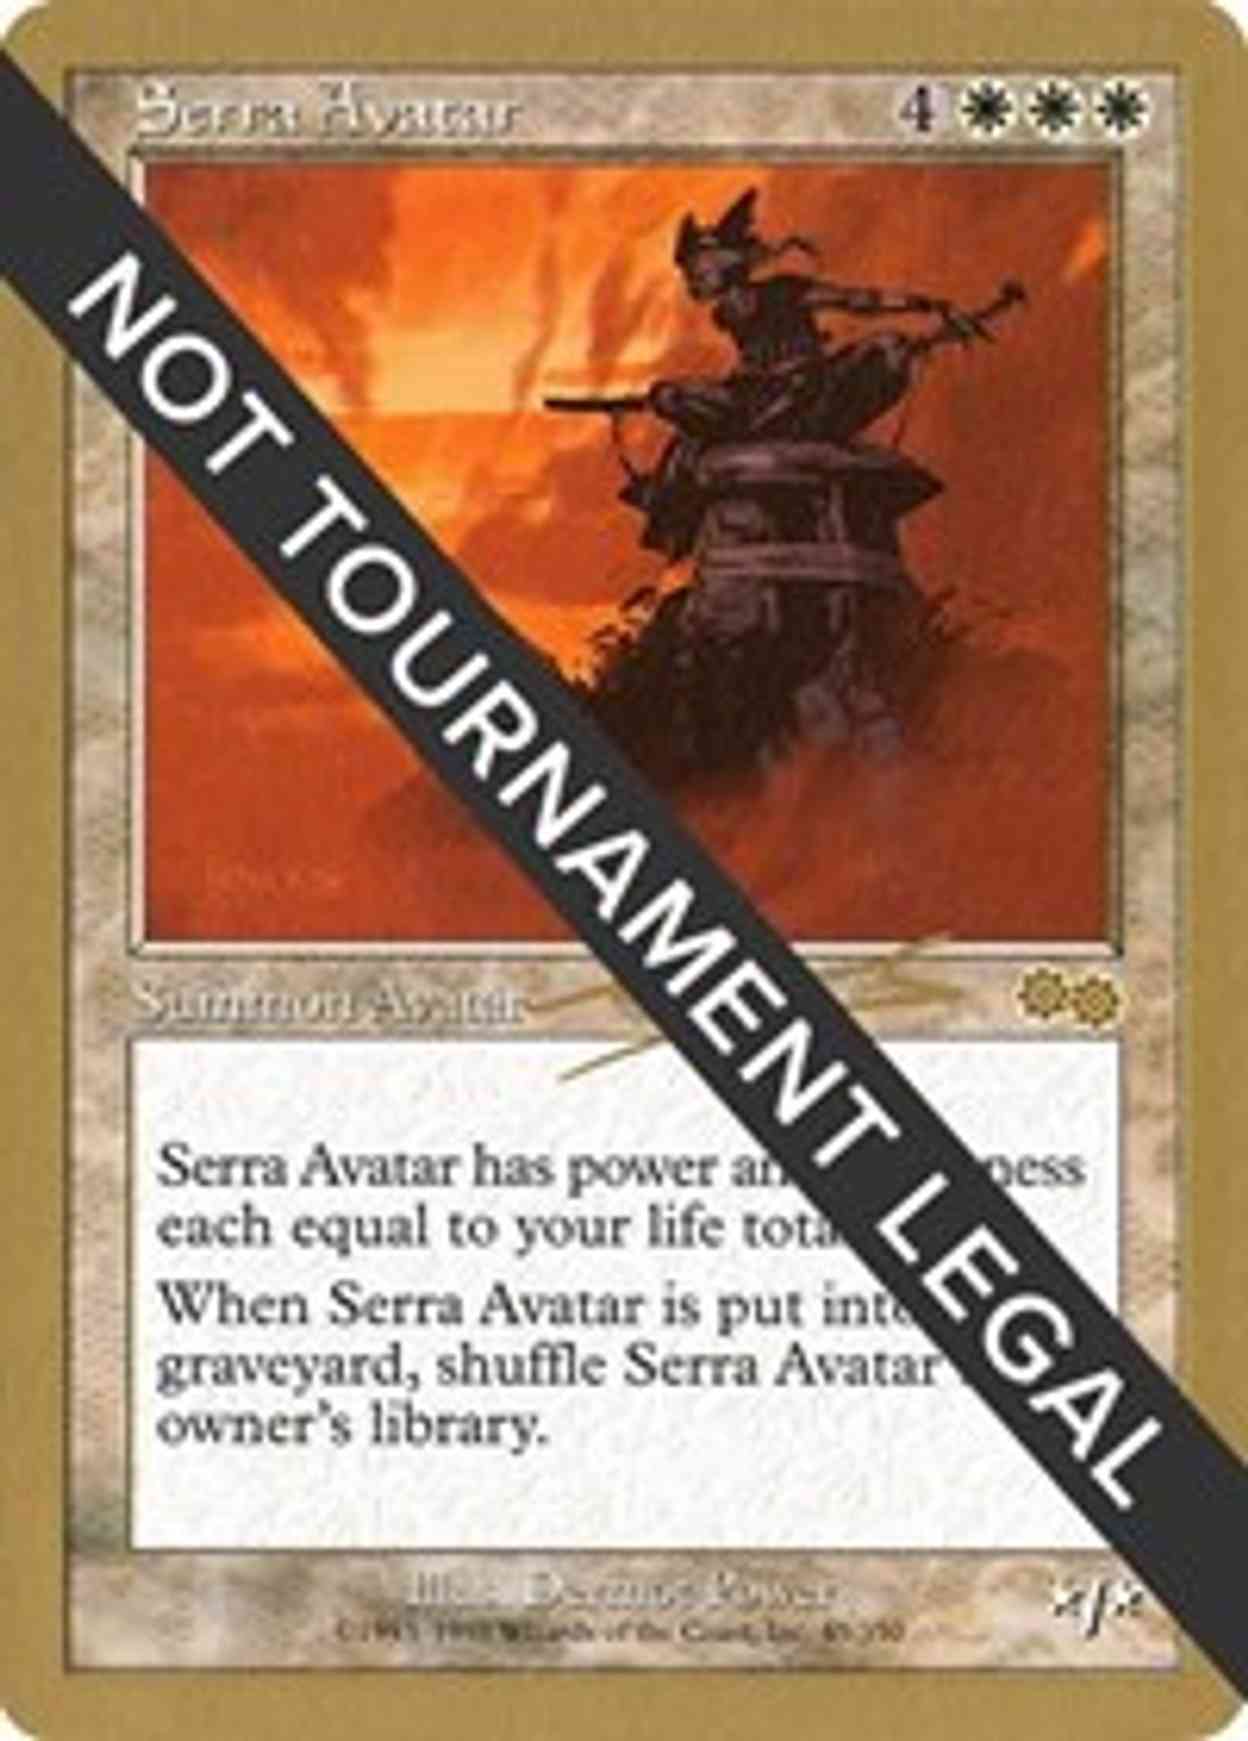 Serra Avatar - 2000 Nicolas Labarre (USG) magic card front